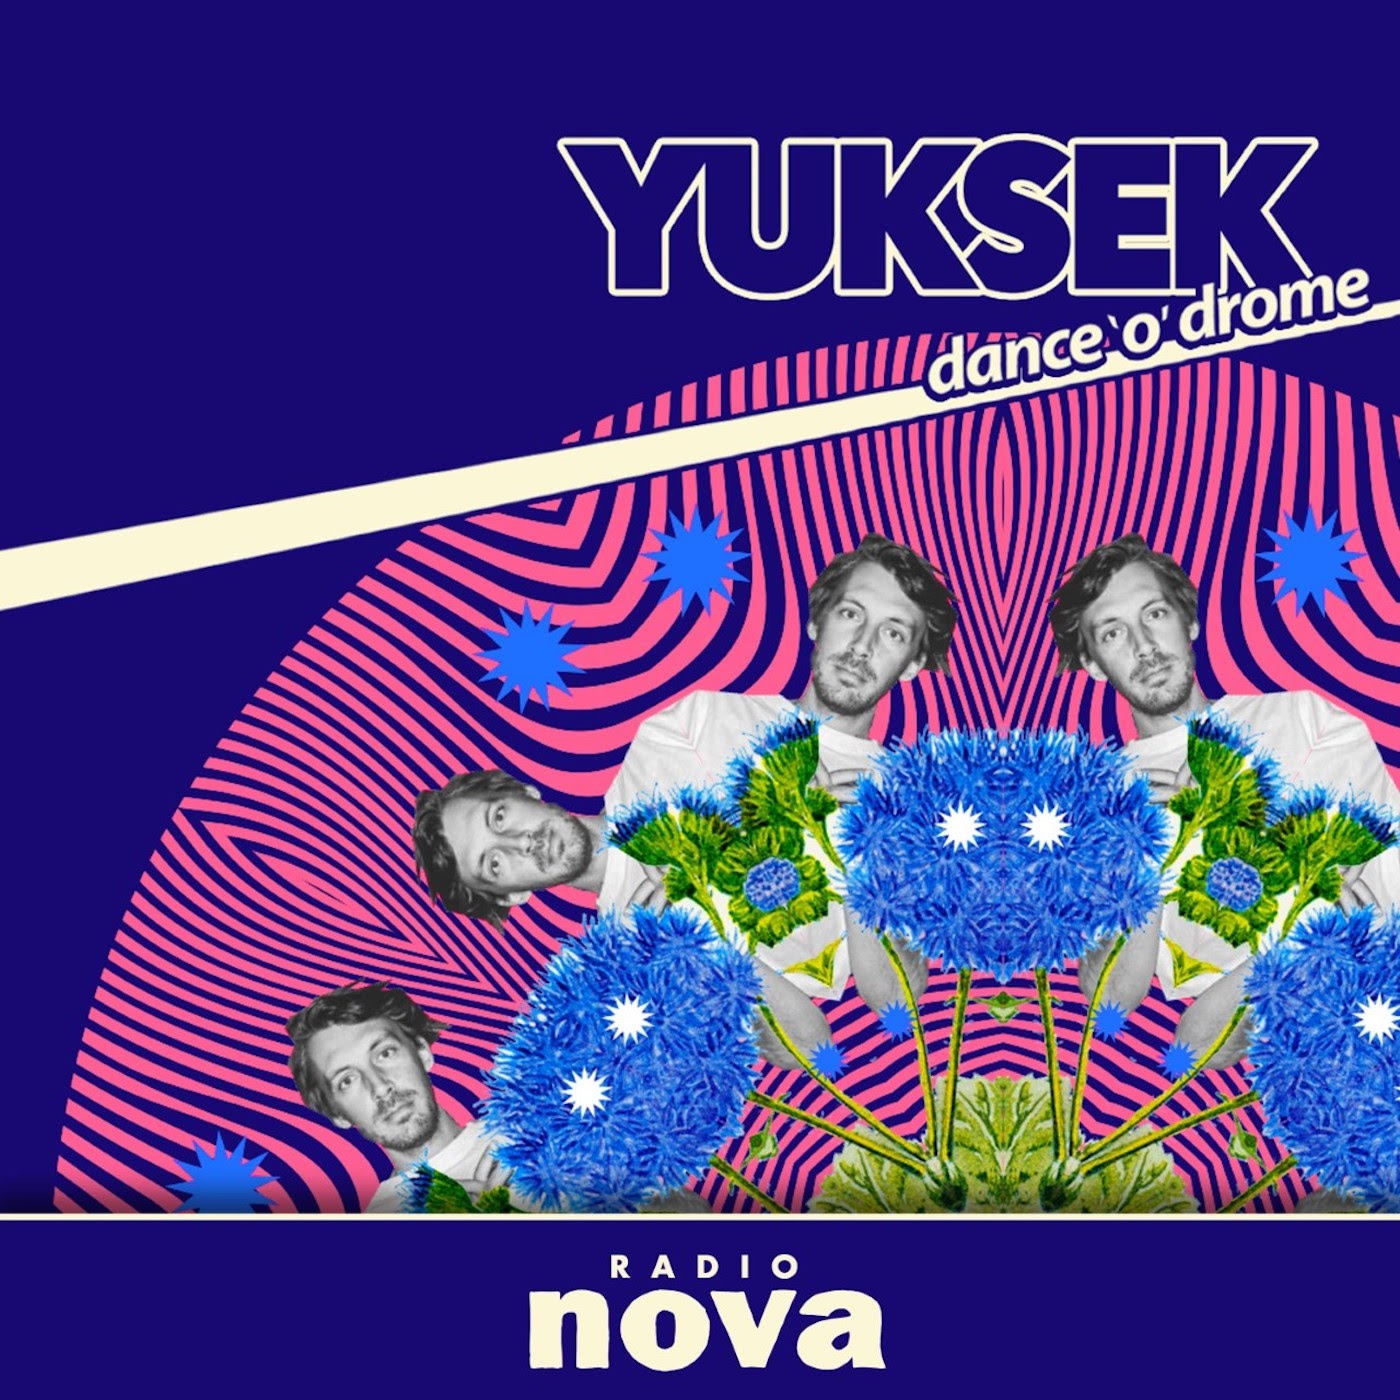 « Dance’o’drome » #9 : le mix de Yuksek, avec Habibi Funk, sur Radio Nova